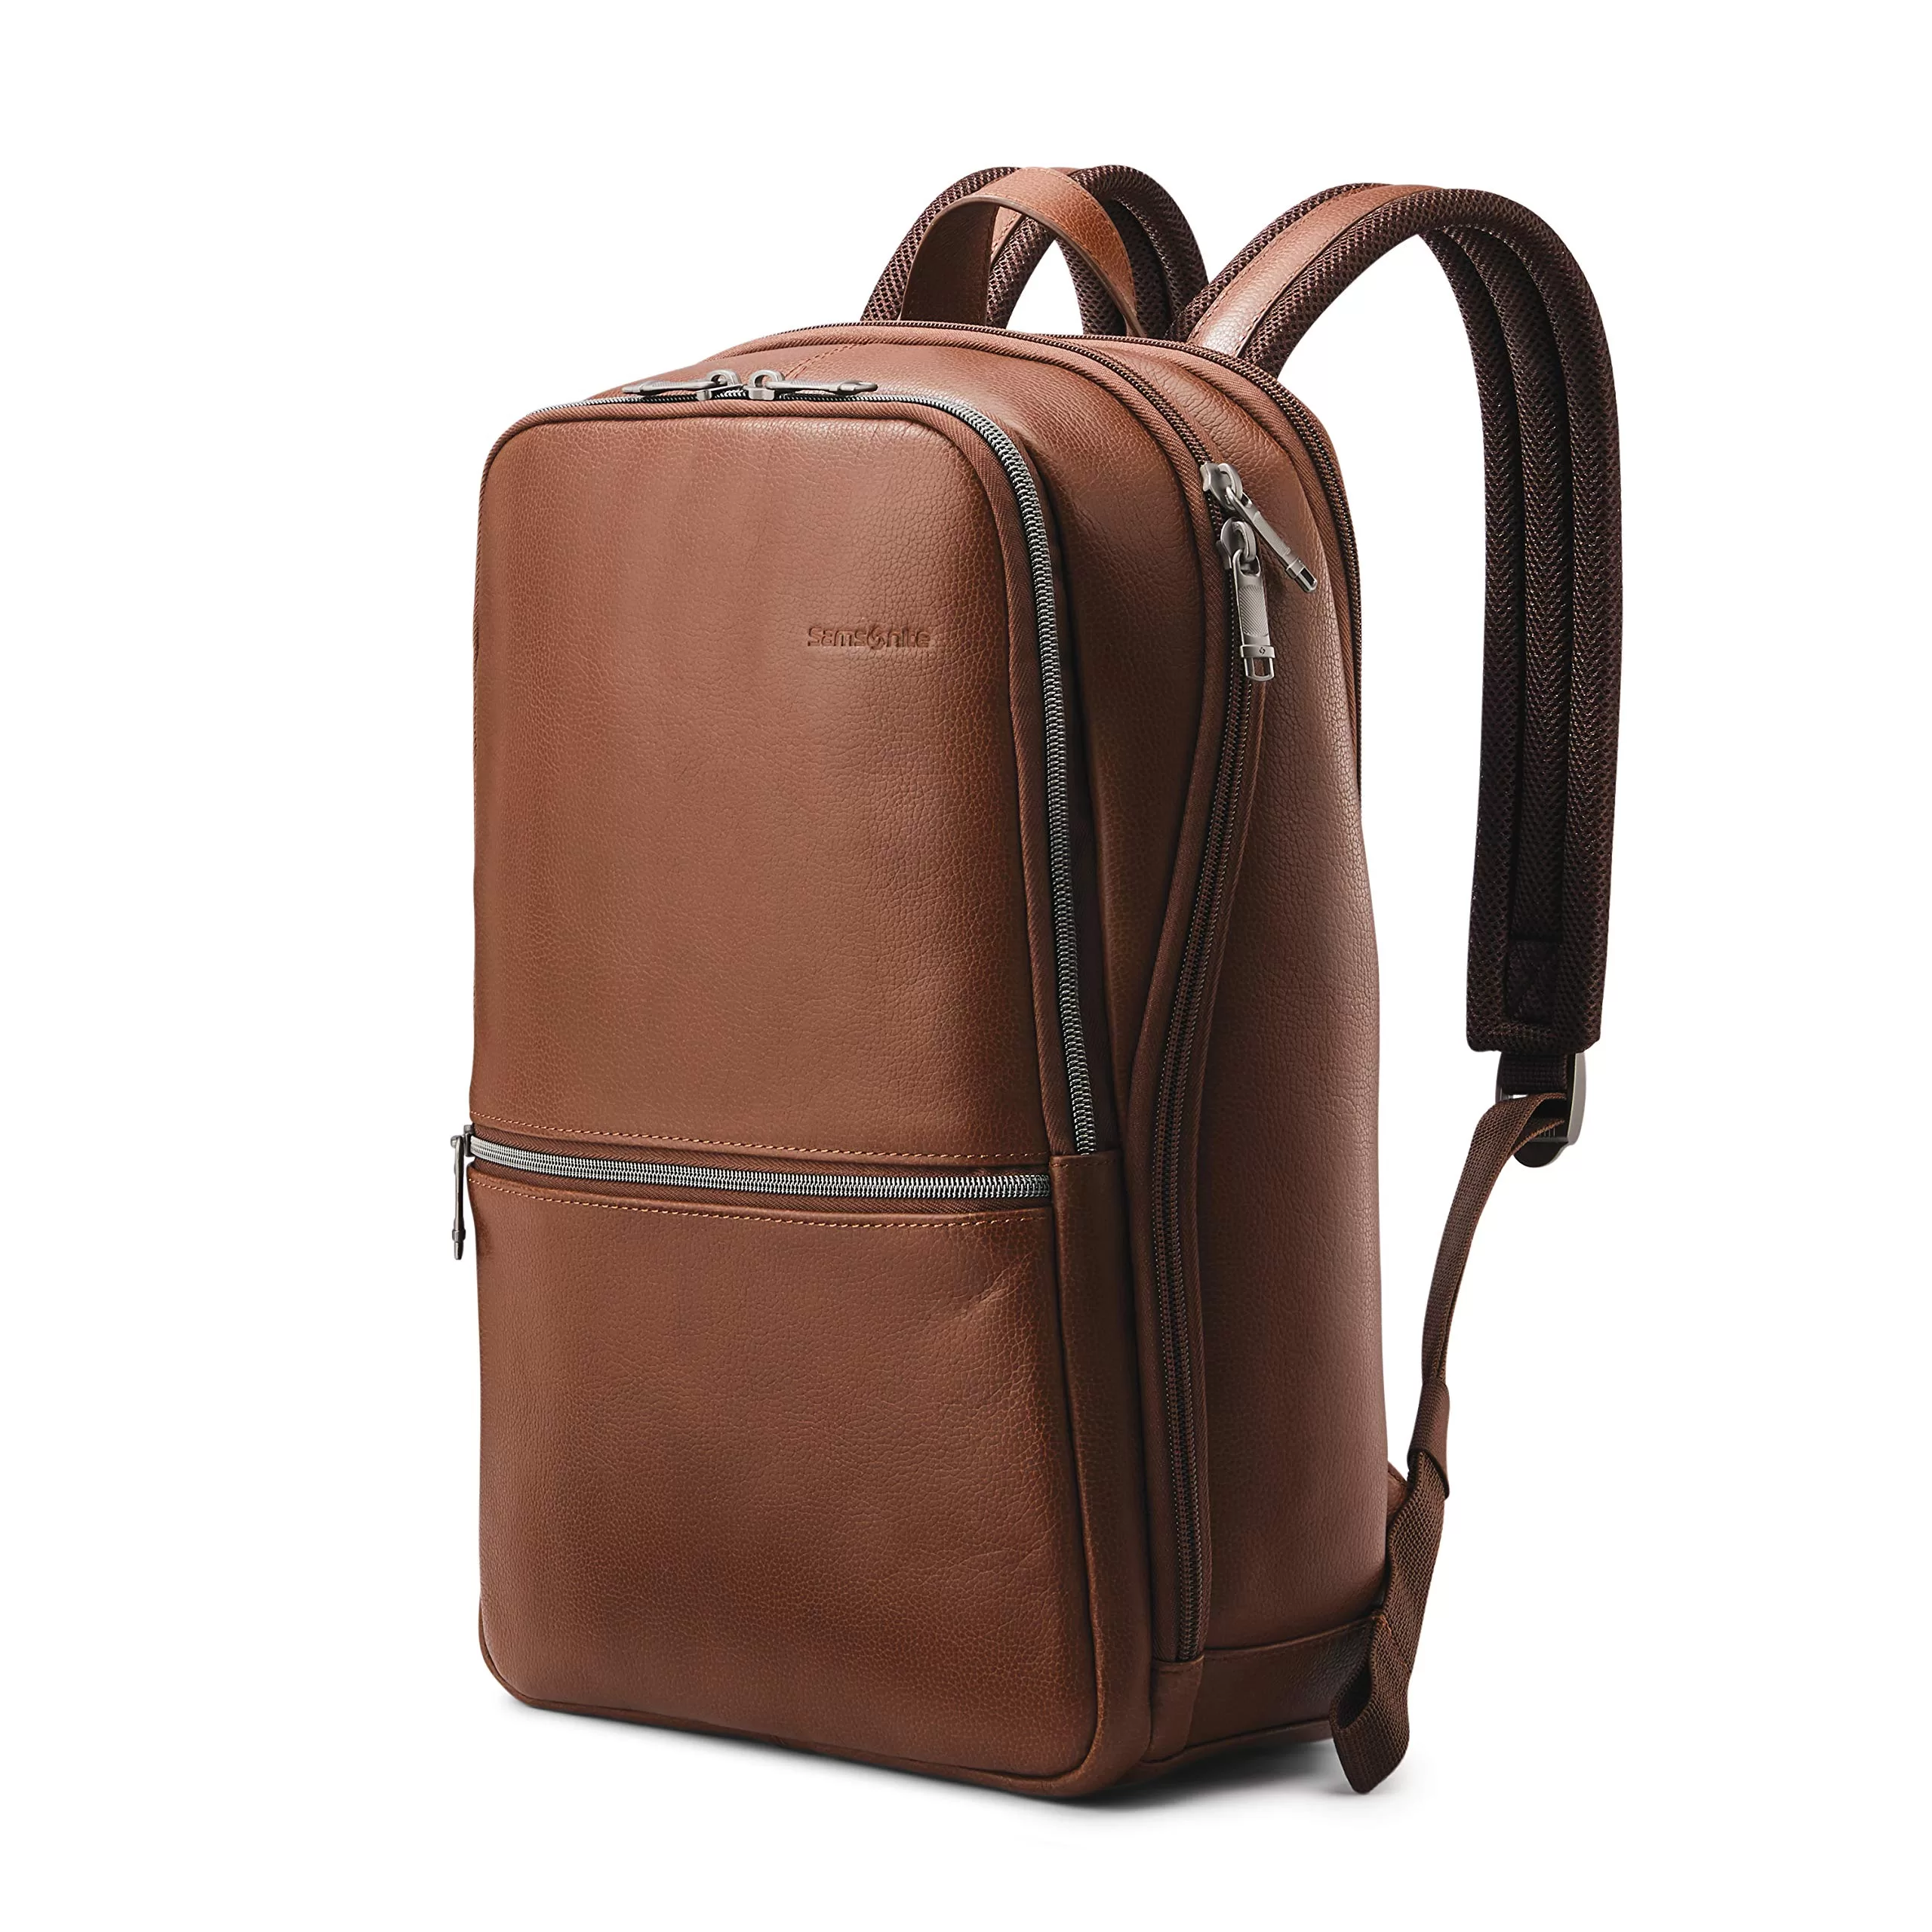 Samsonite Leather Travel Backpack